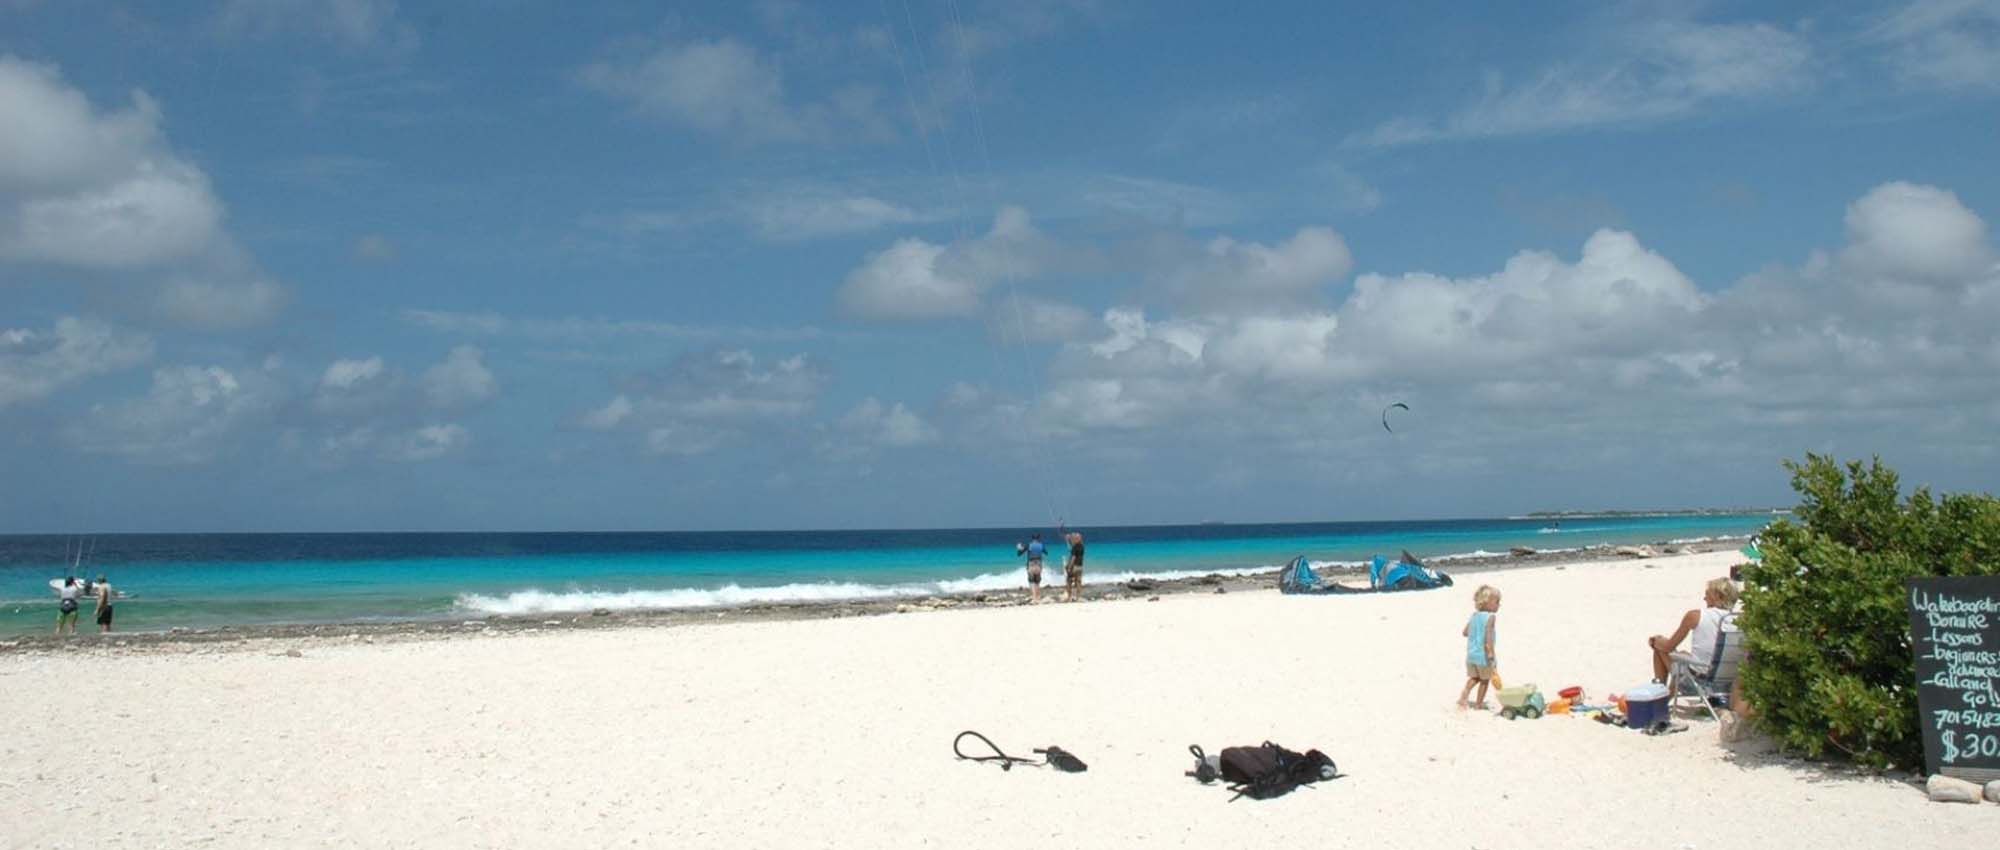 People flying kites and enjoying the white sand beach